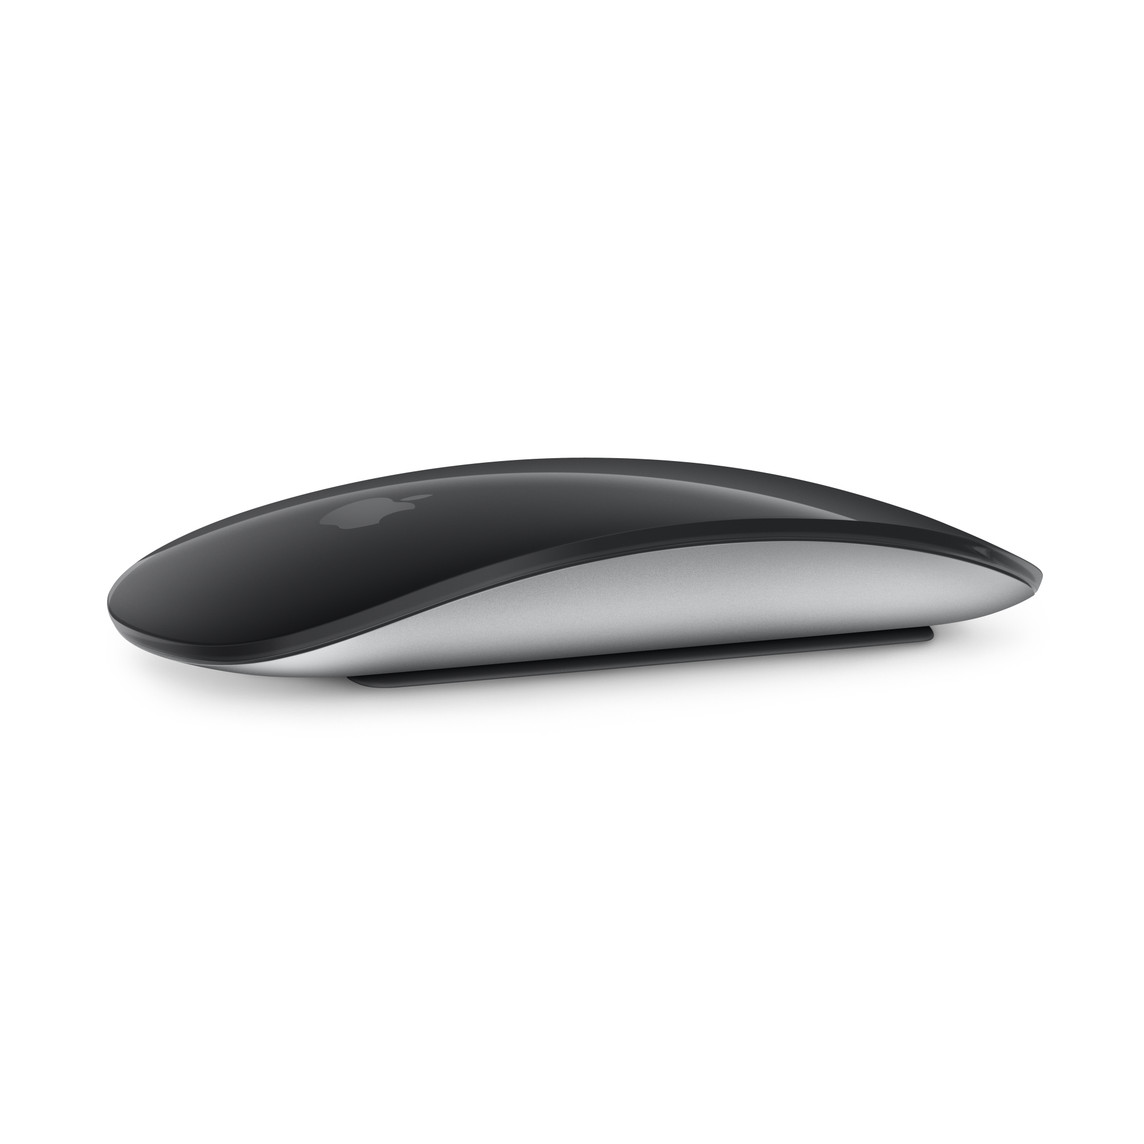 Magic Mouse negro, se muestra su diseño curvo y la superficie Multi-Touch.
